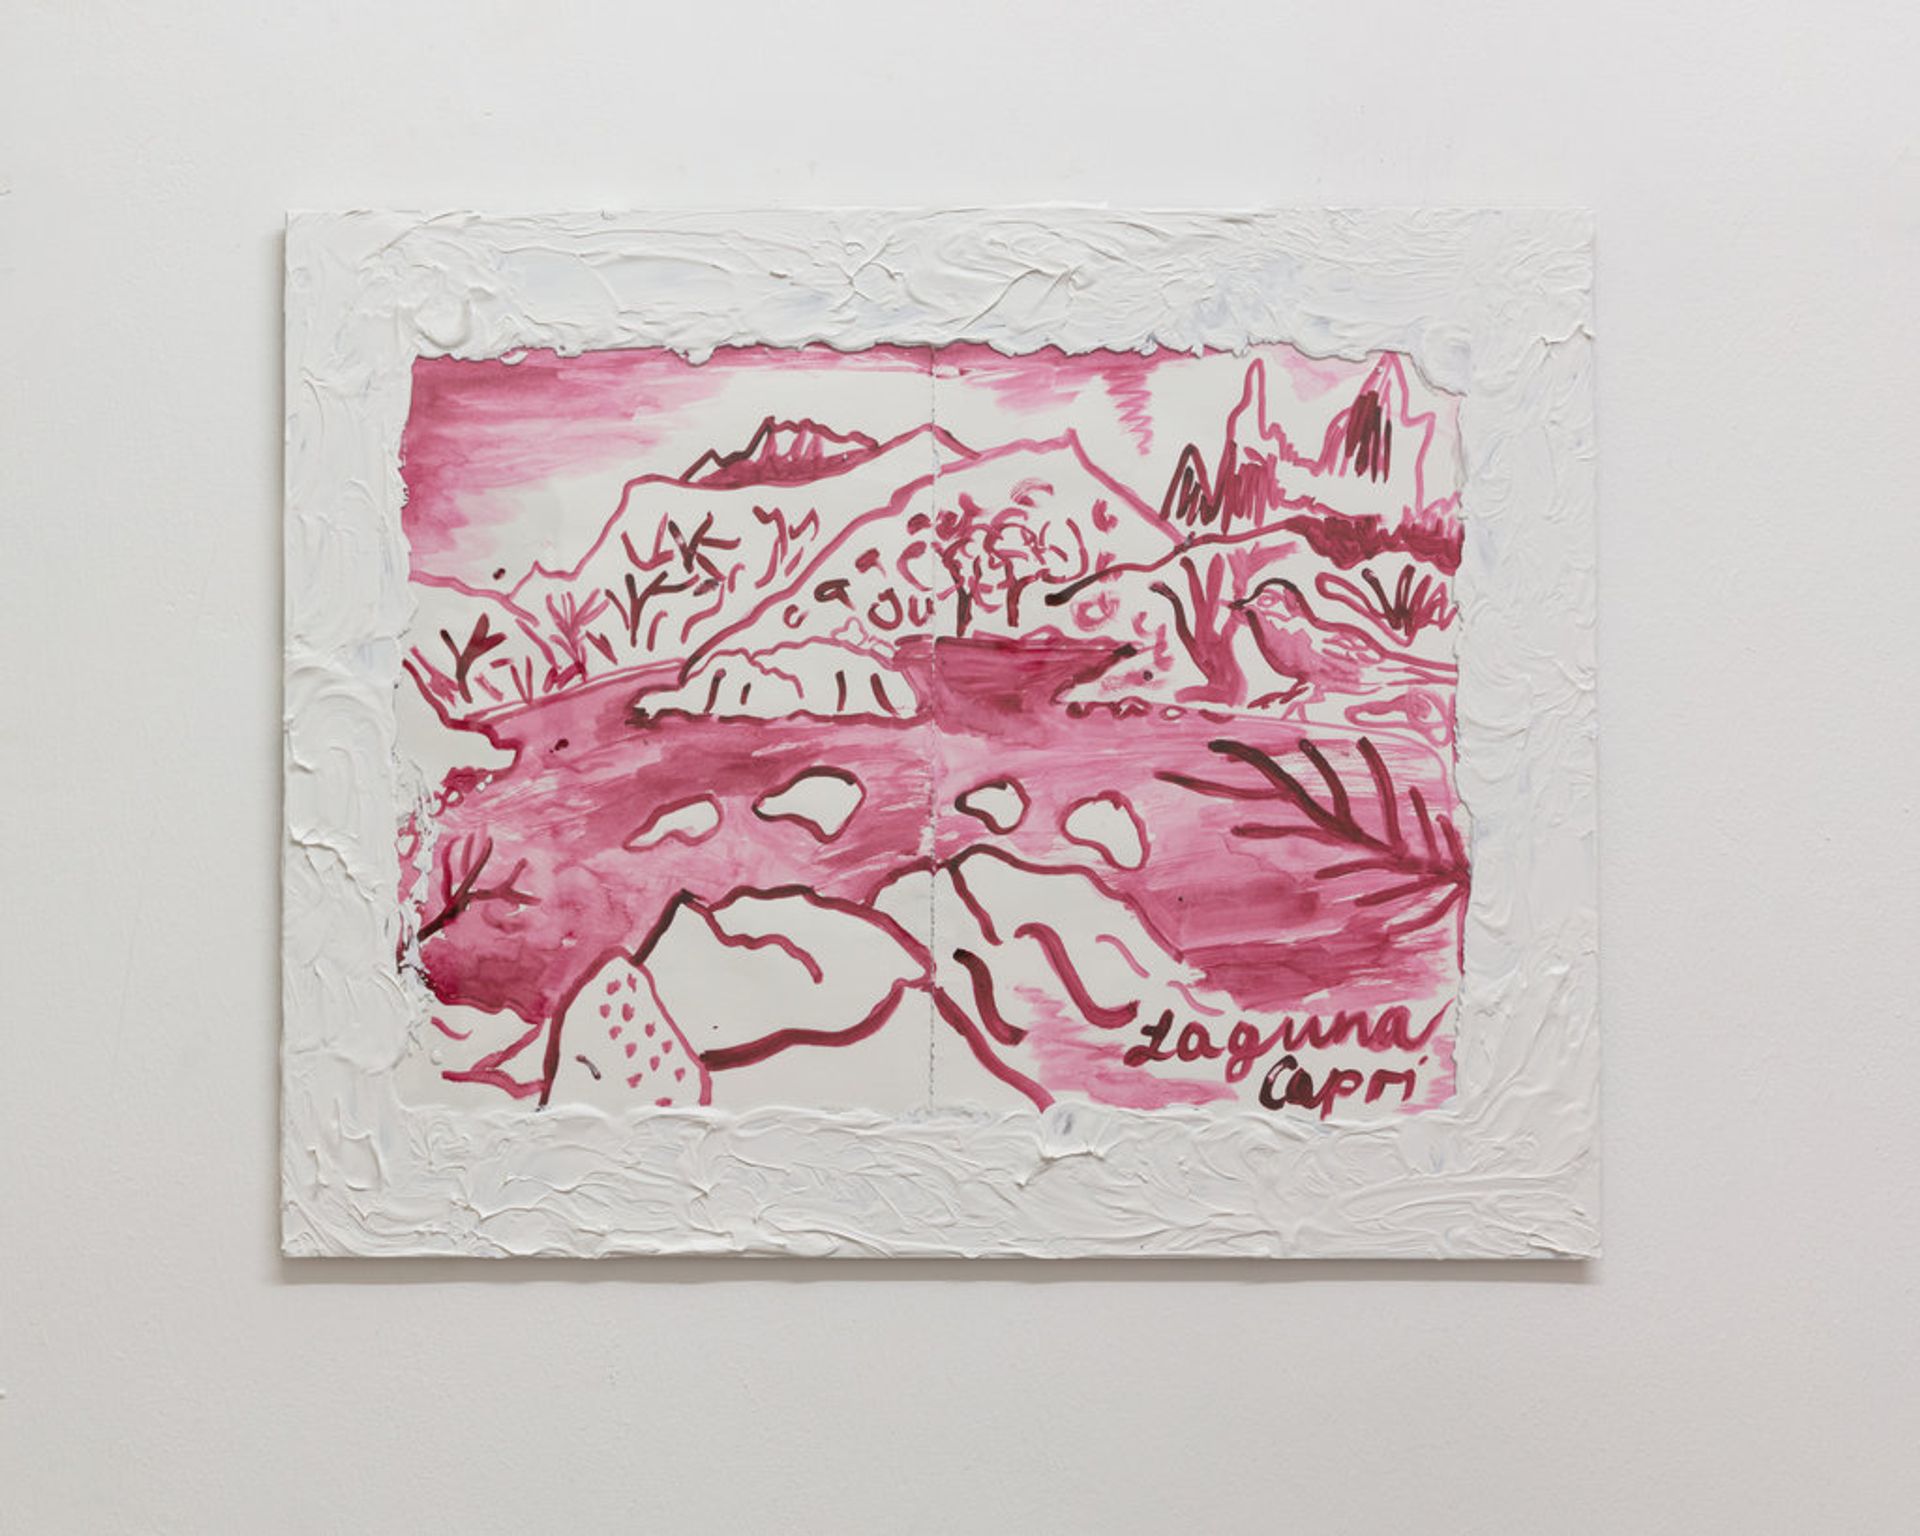 Anna McCarthy, Laguna Capri, 2019, gouache on paper, acrylic on glass, 40 × 50 cm